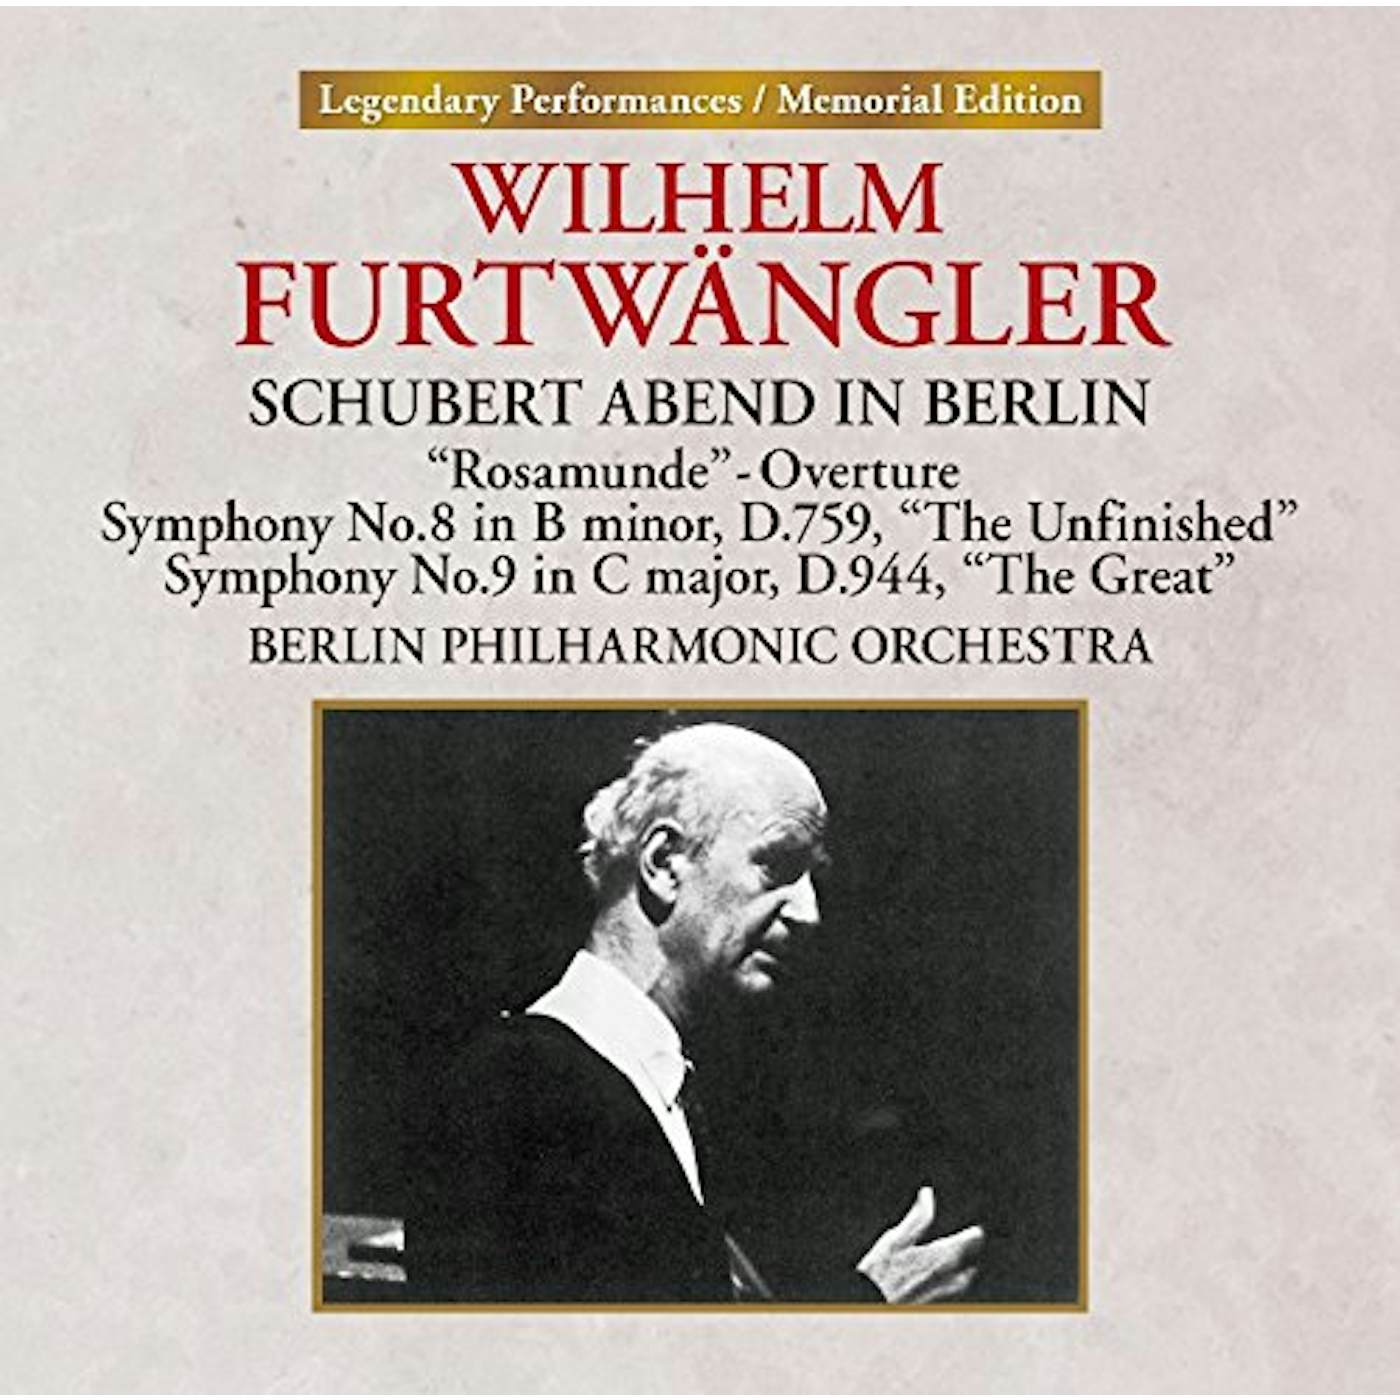 Wilhelm Furtwängler SCHUBERT ABEND IN BERLIN CD